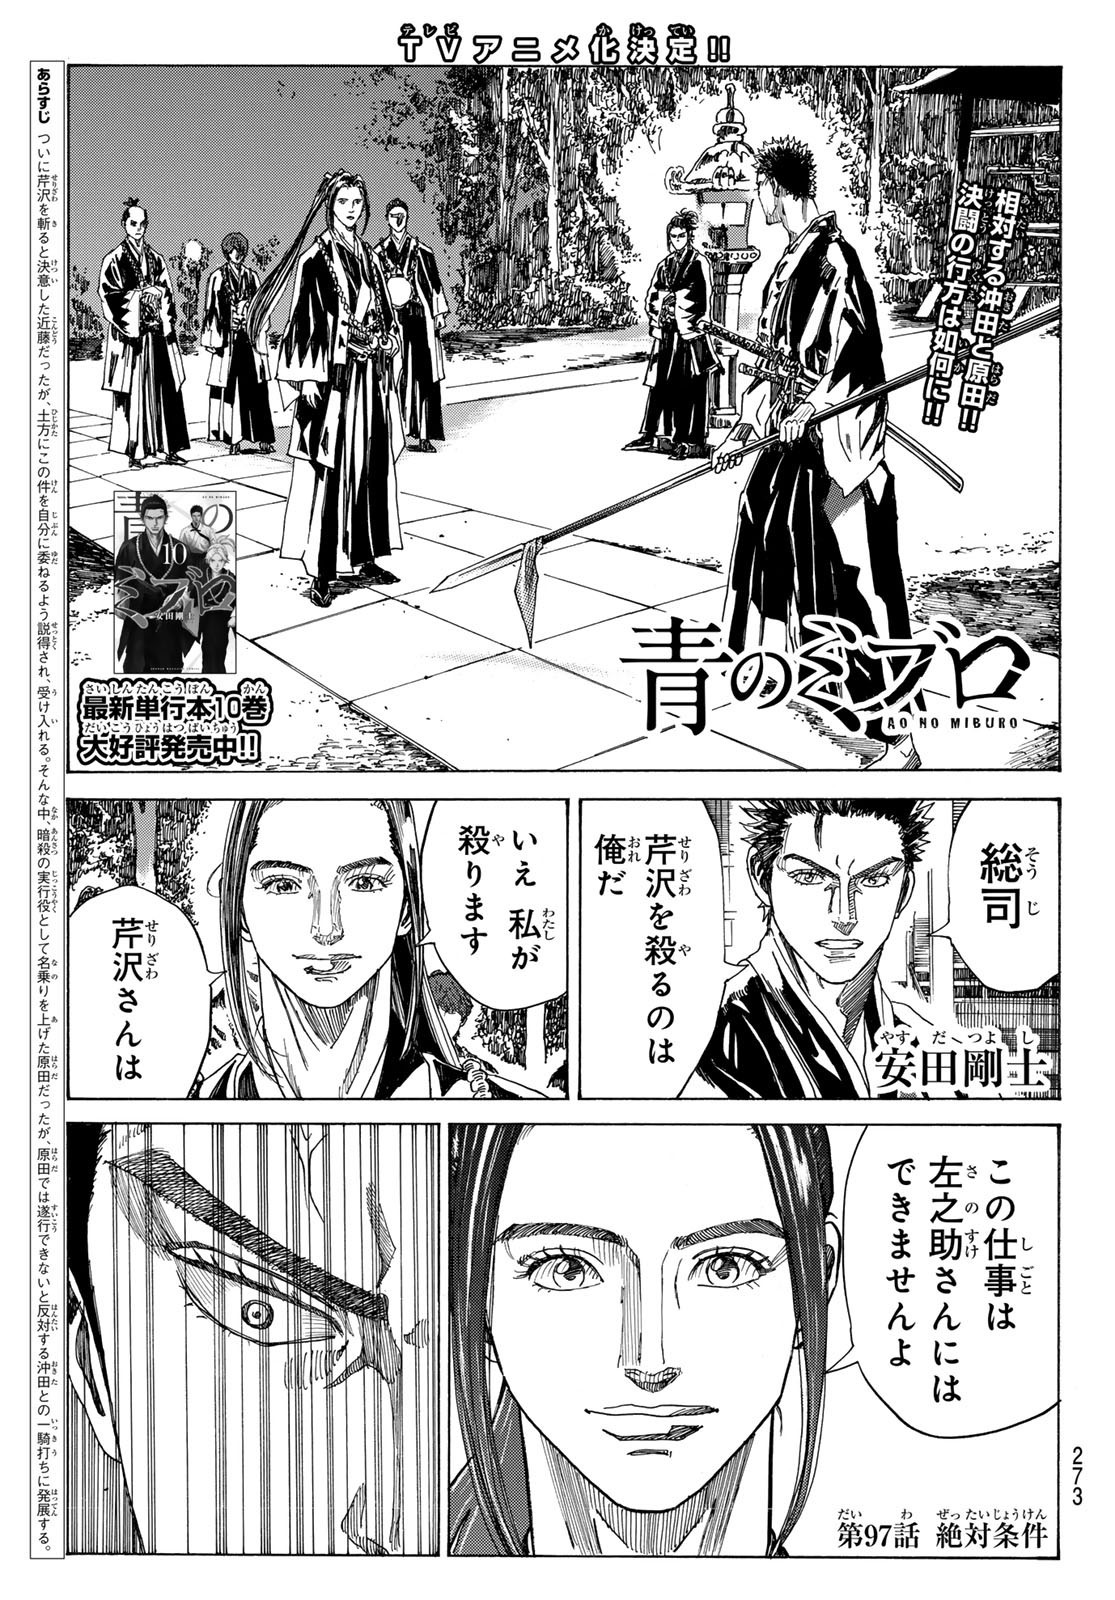 Ao no Miburo - Chapter 097 - Page 1